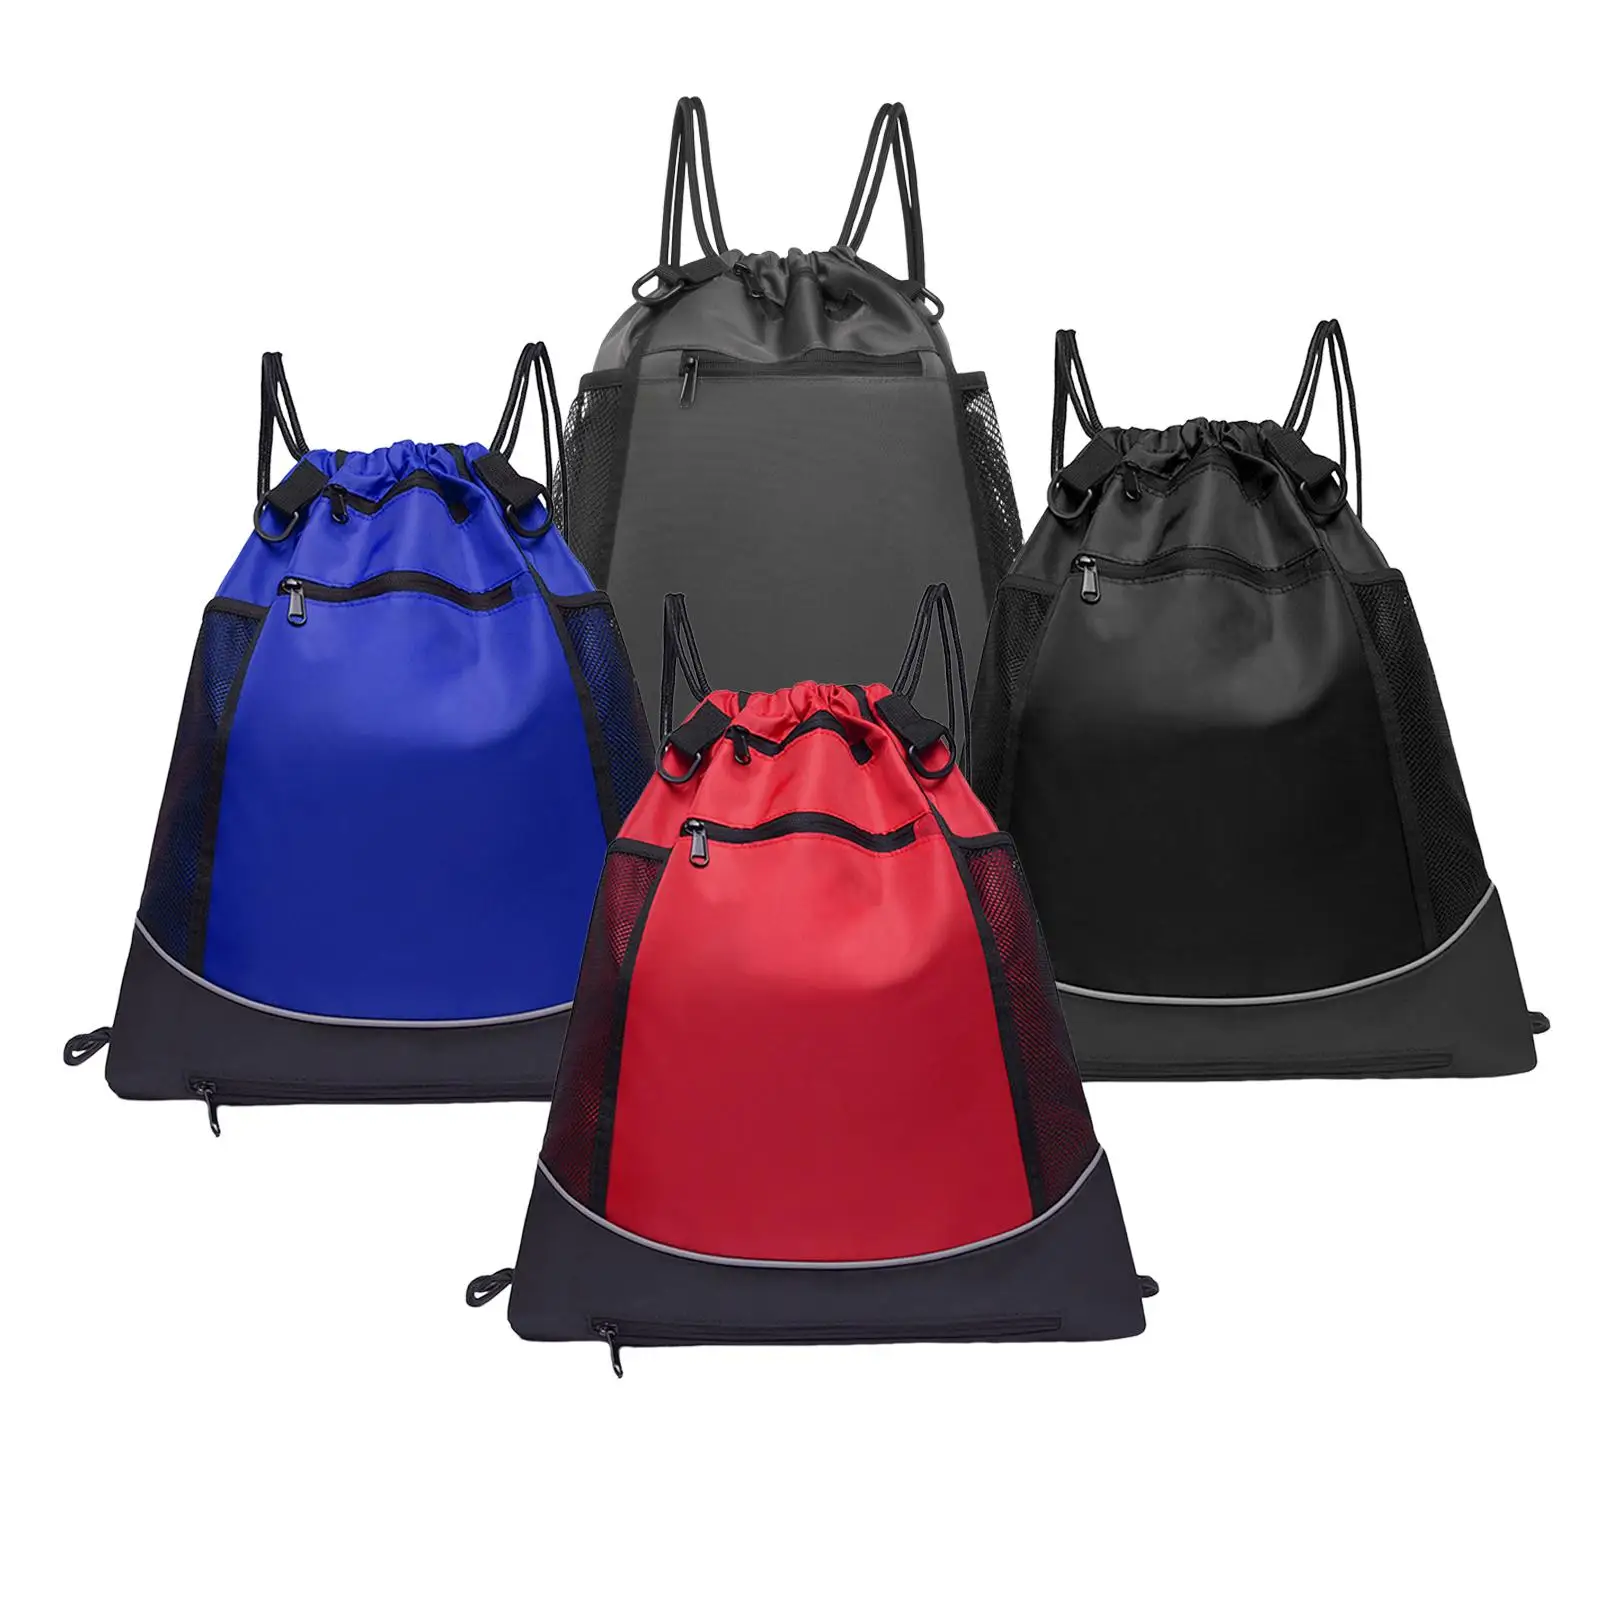 Drawstring Backpack Sports Gym with Water Resistant Shoulder Bag Pockets for